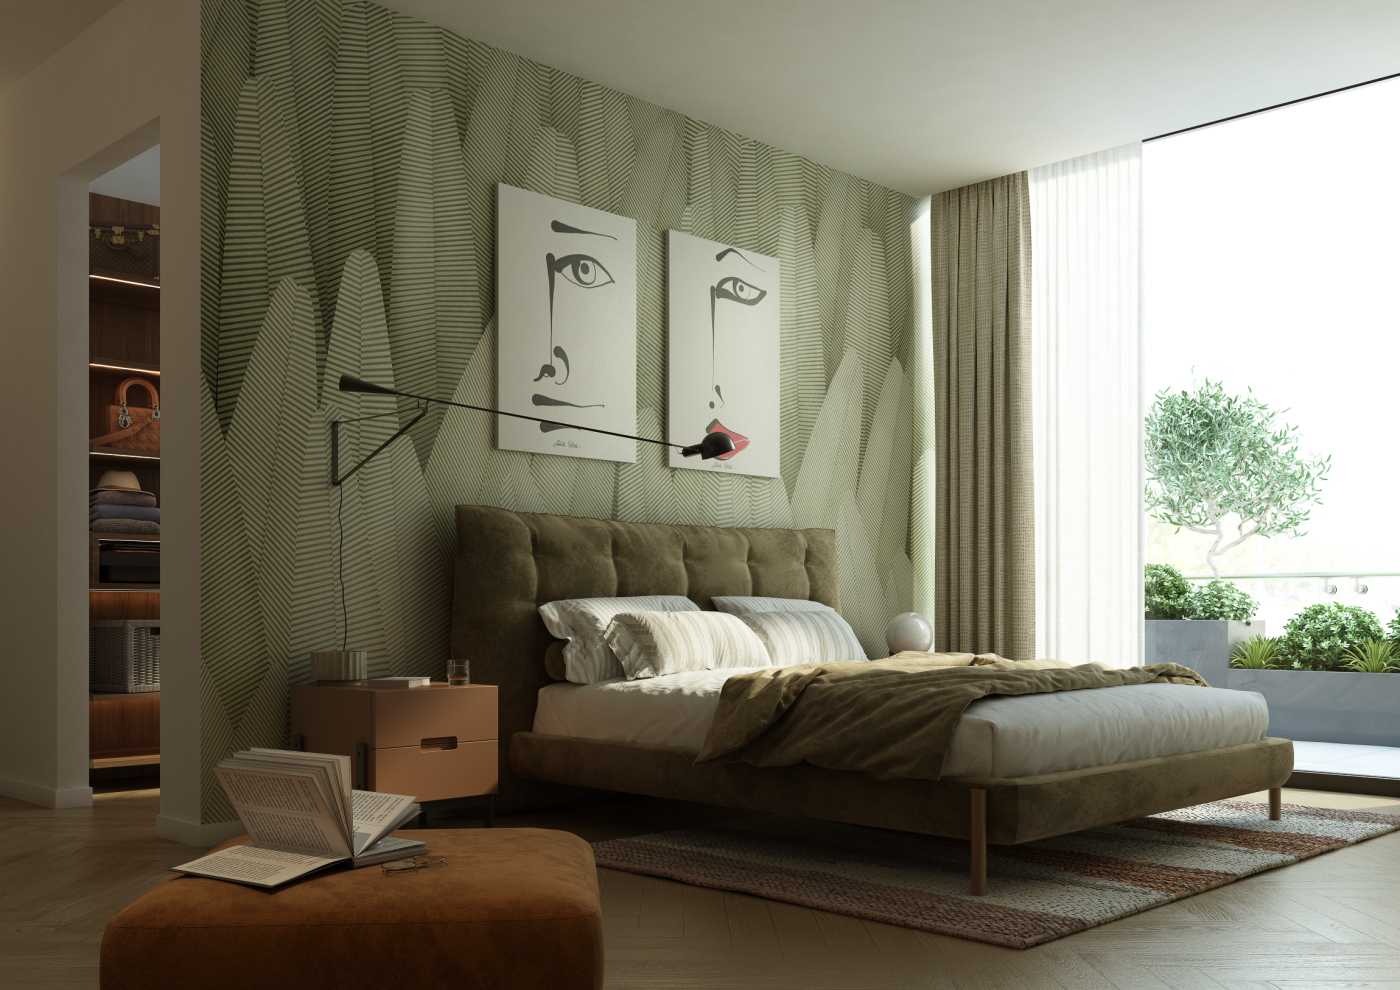 Green Bedroom Interior project